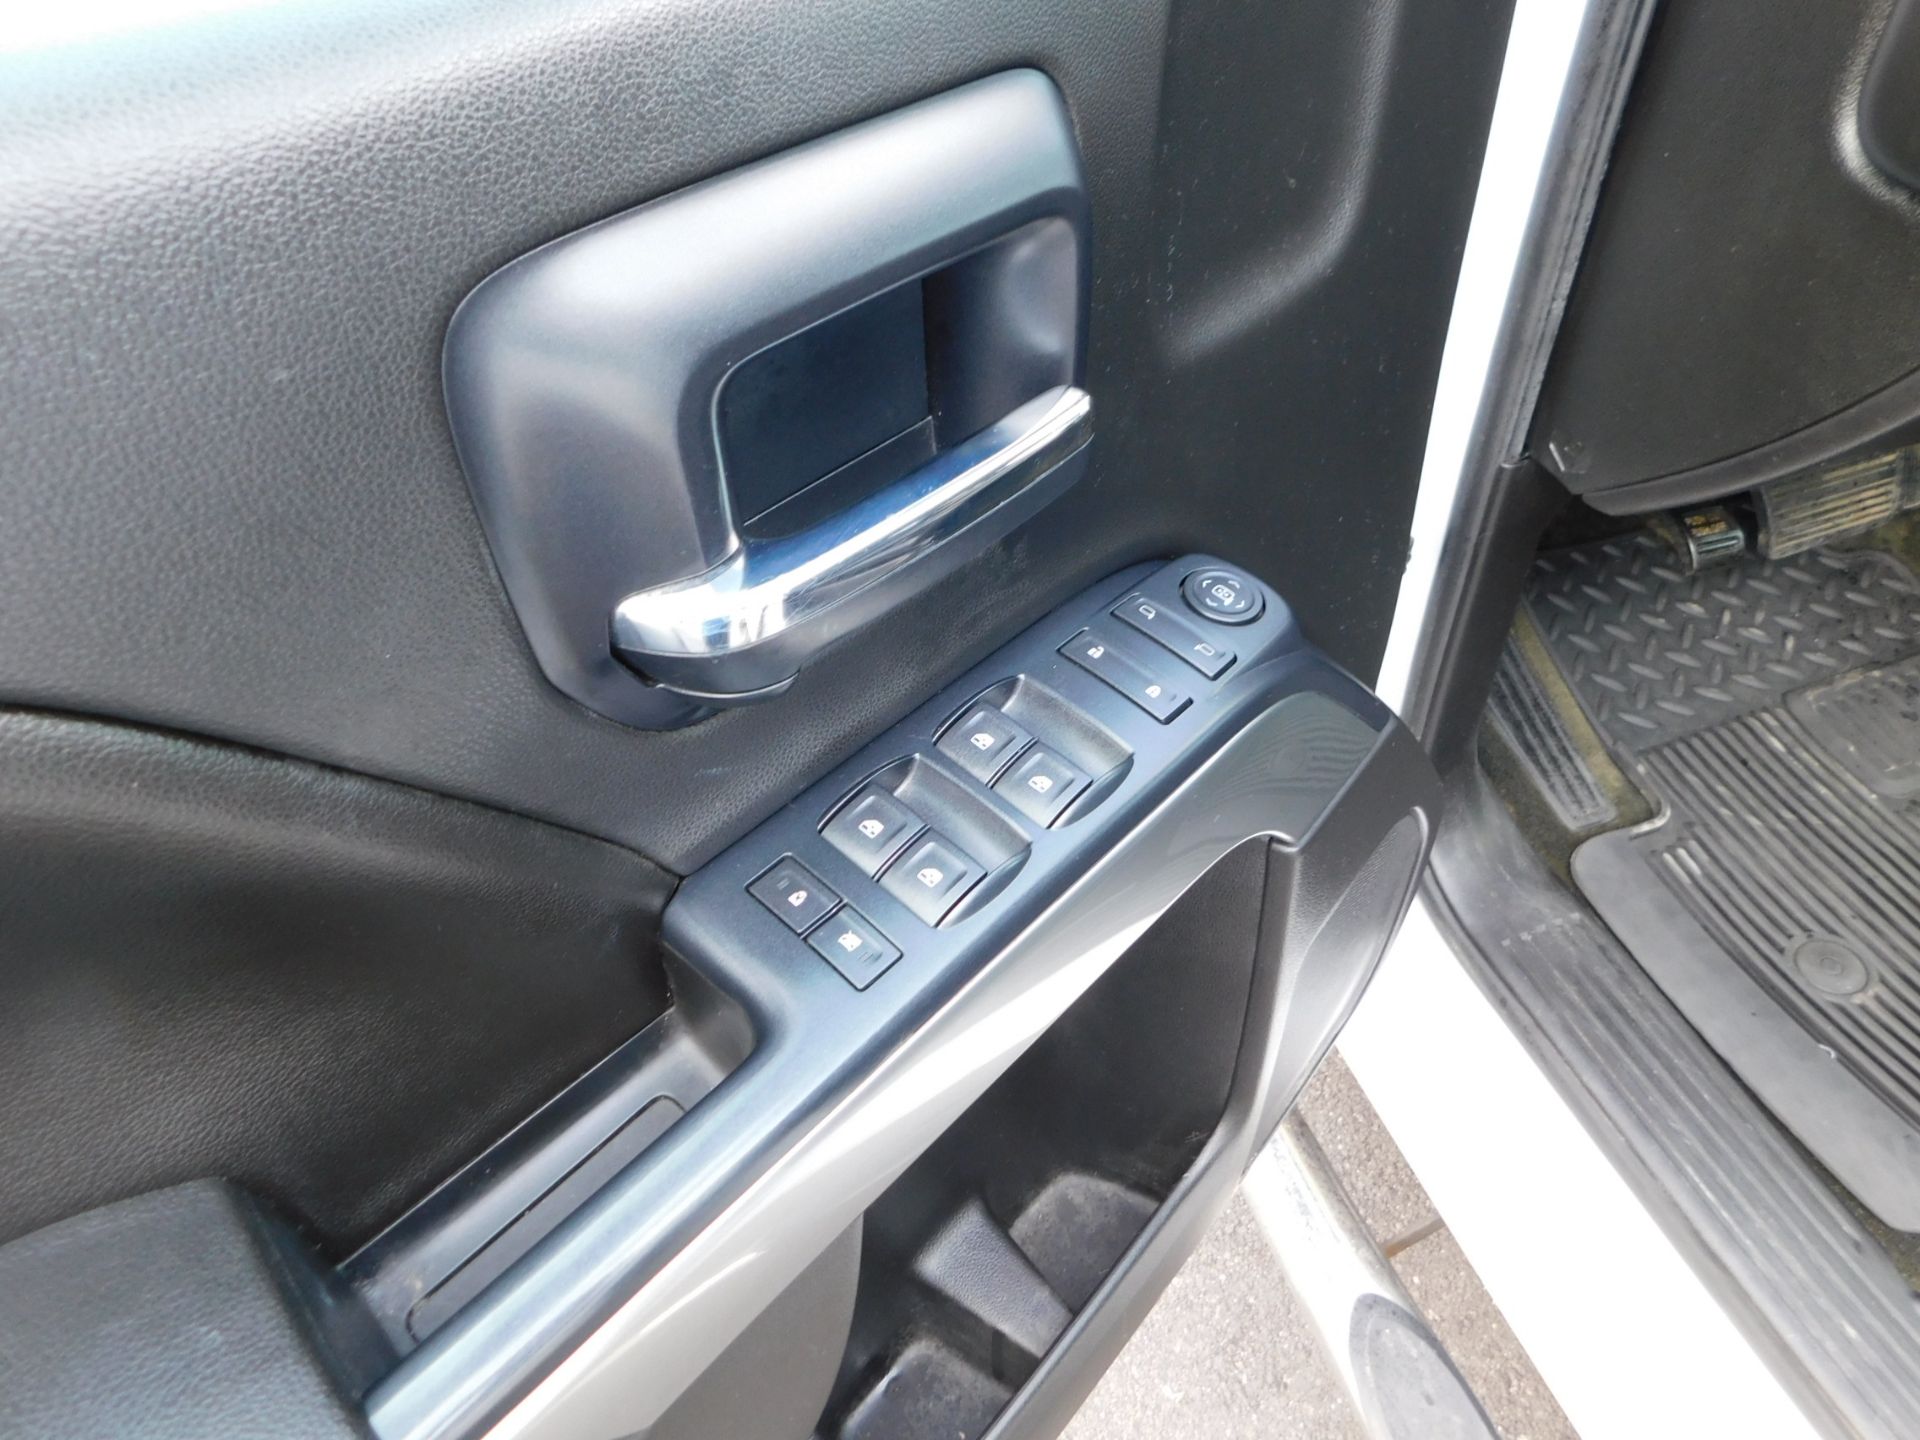 2014 Chevrolet Silverado LT Pickup, VIN 1GCVKREC3EZ139405, 4-Door 4 WD, Automatic, AM/FM, AC, Cruise - Image 23 of 51